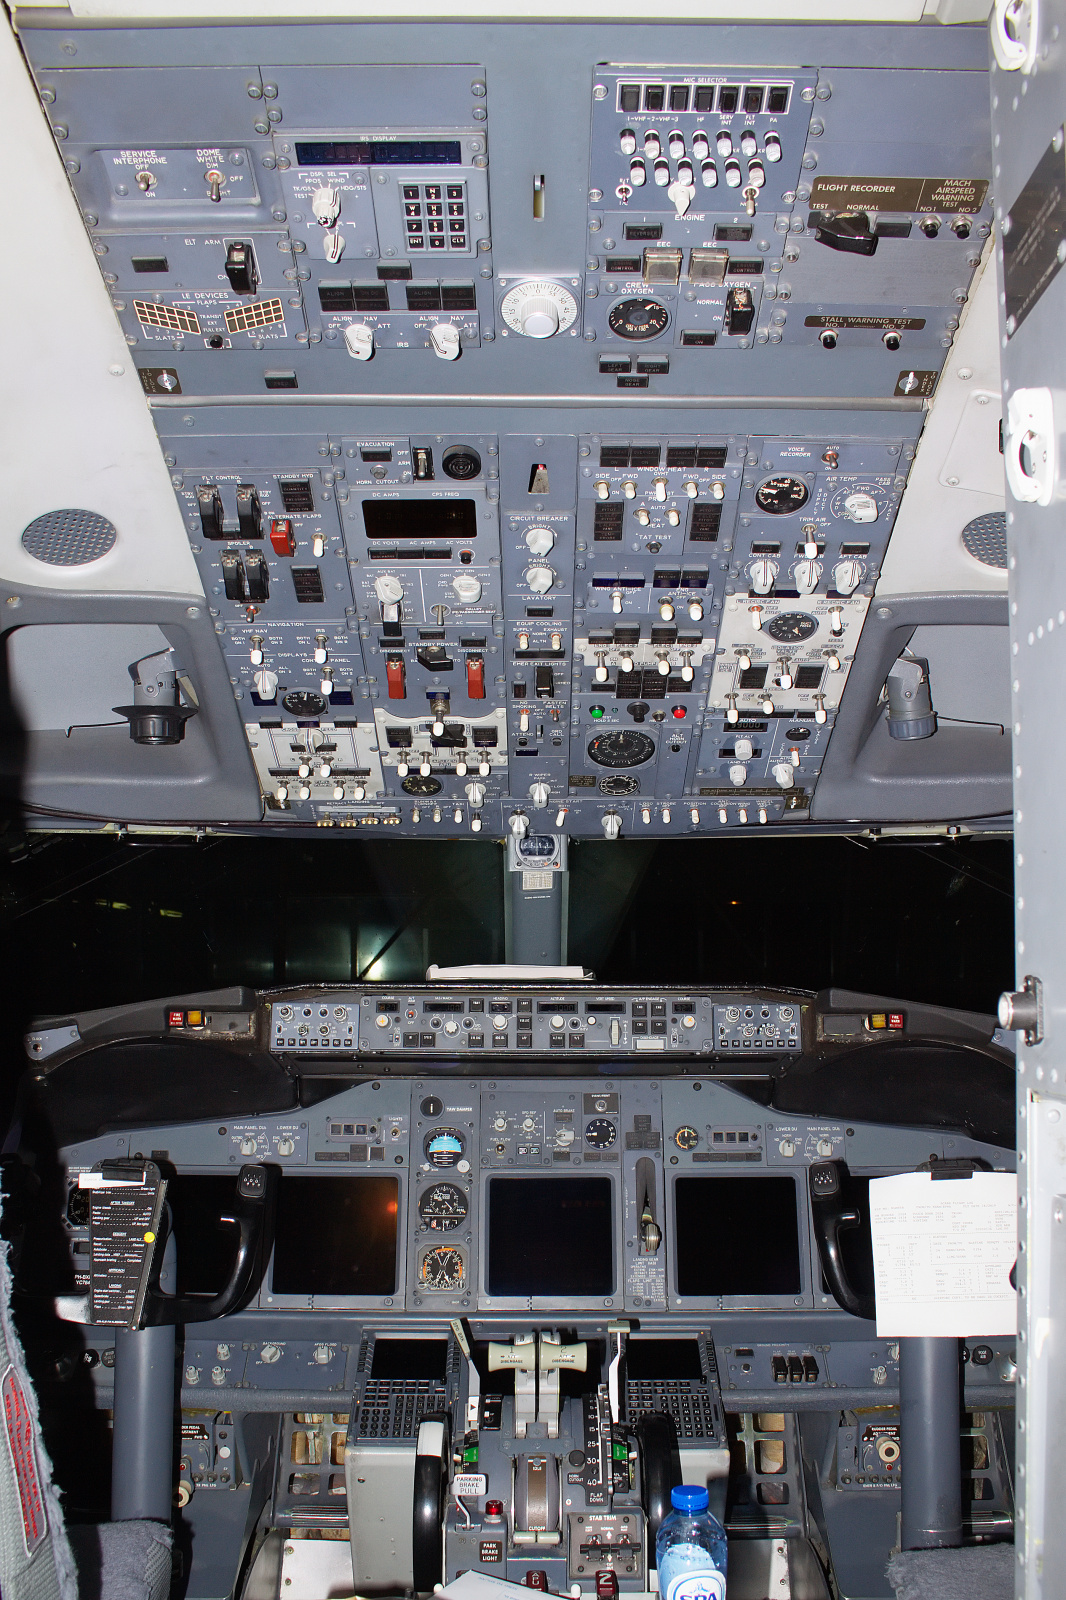 PH-BXD - cockpit (Aircraft » EPWA Spotting » Boeing 737-800 » KLM Royal Dutch Airlines)